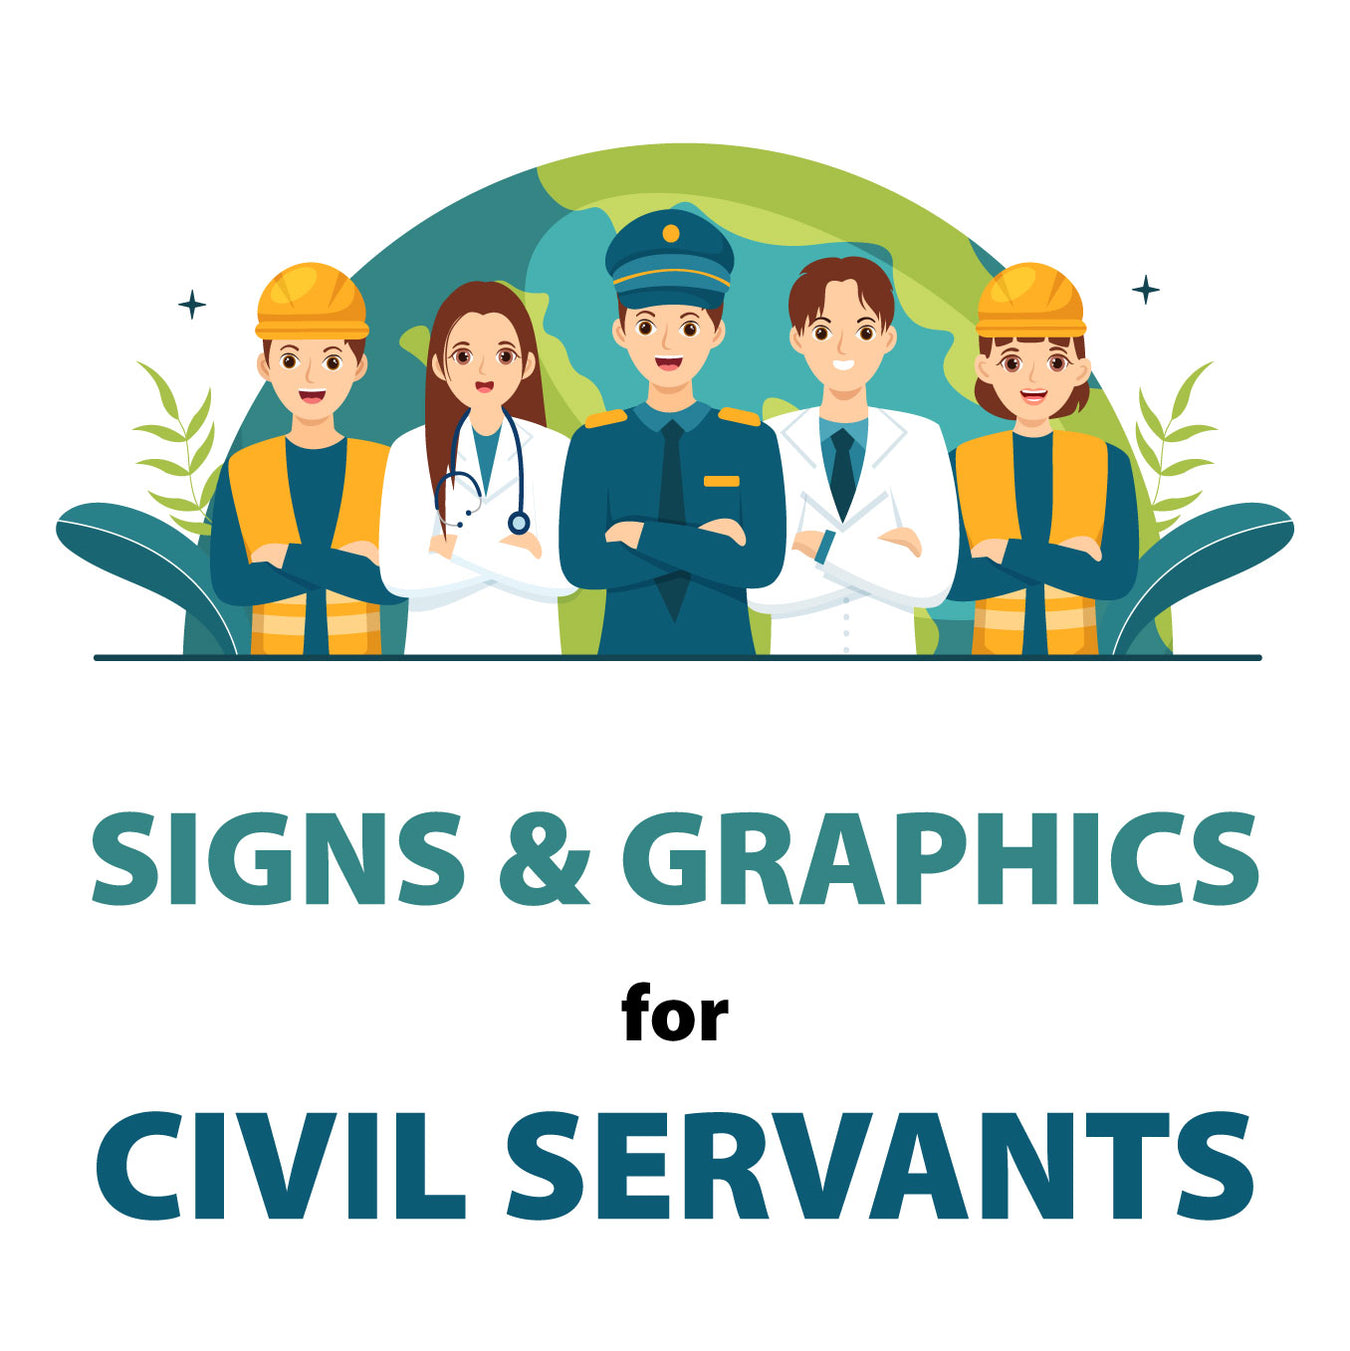 Civil Servant Signs for cars